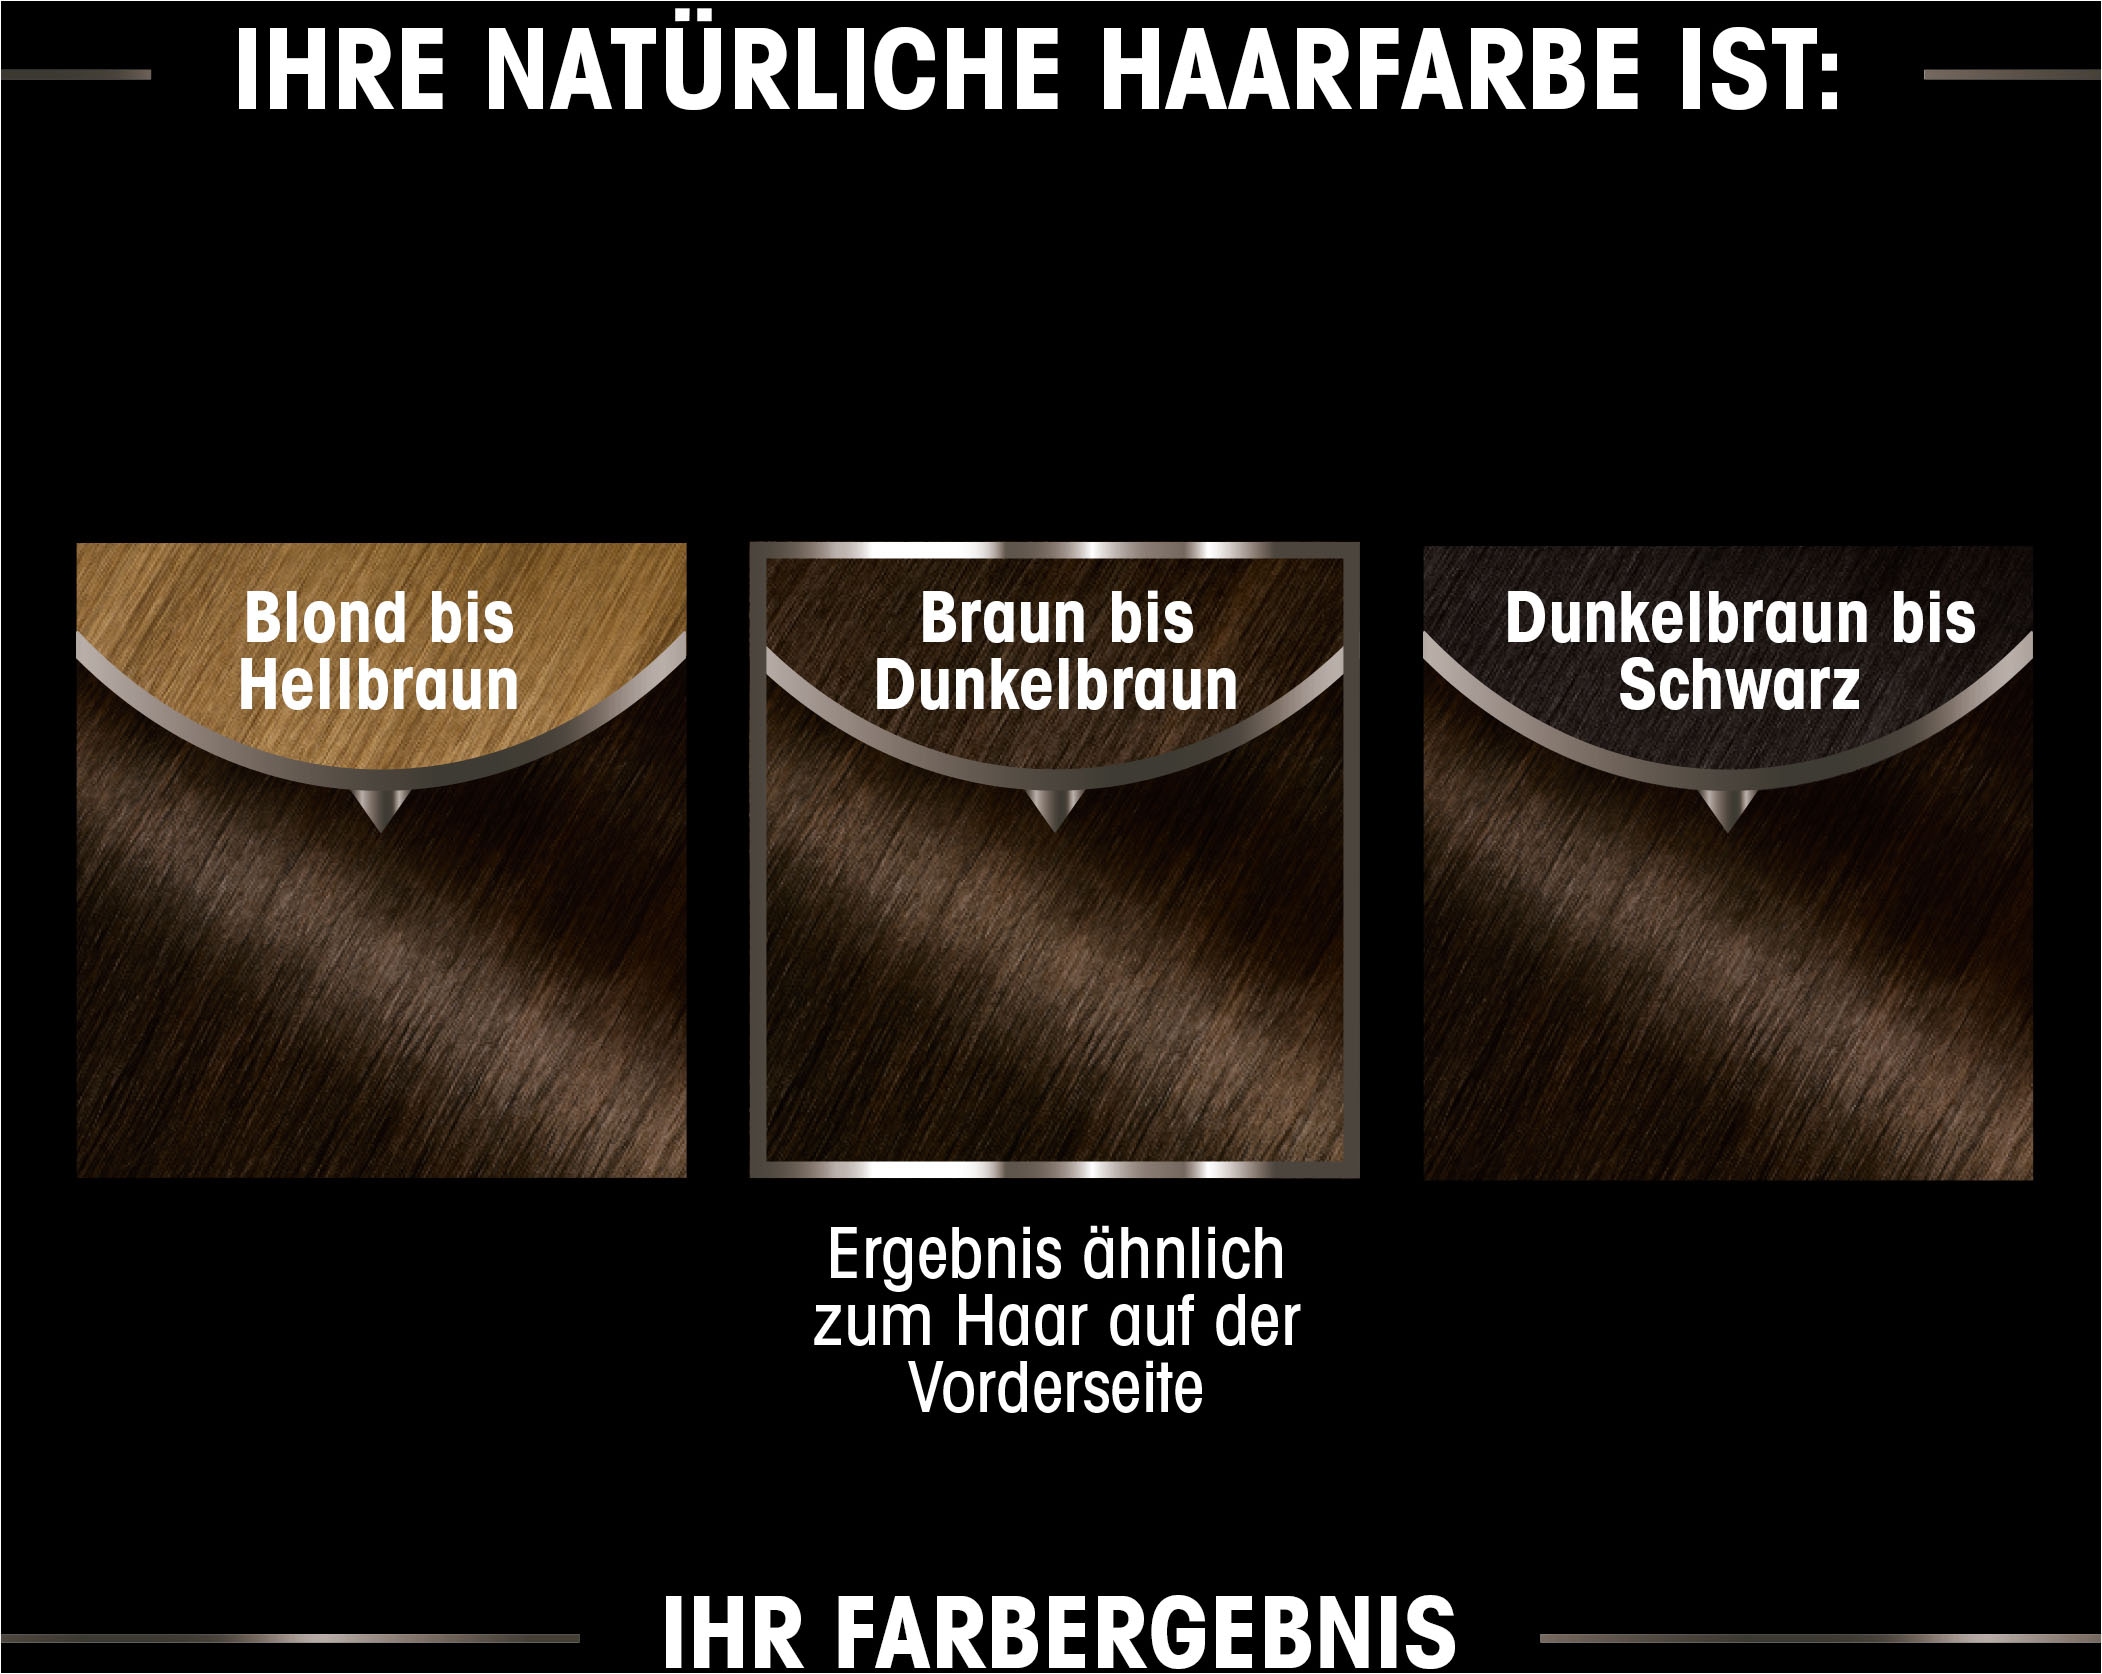 GARNIER Coloration »Garnier Olia dauerhafte Haarfarbe«, (Packung, 3 tlg.)